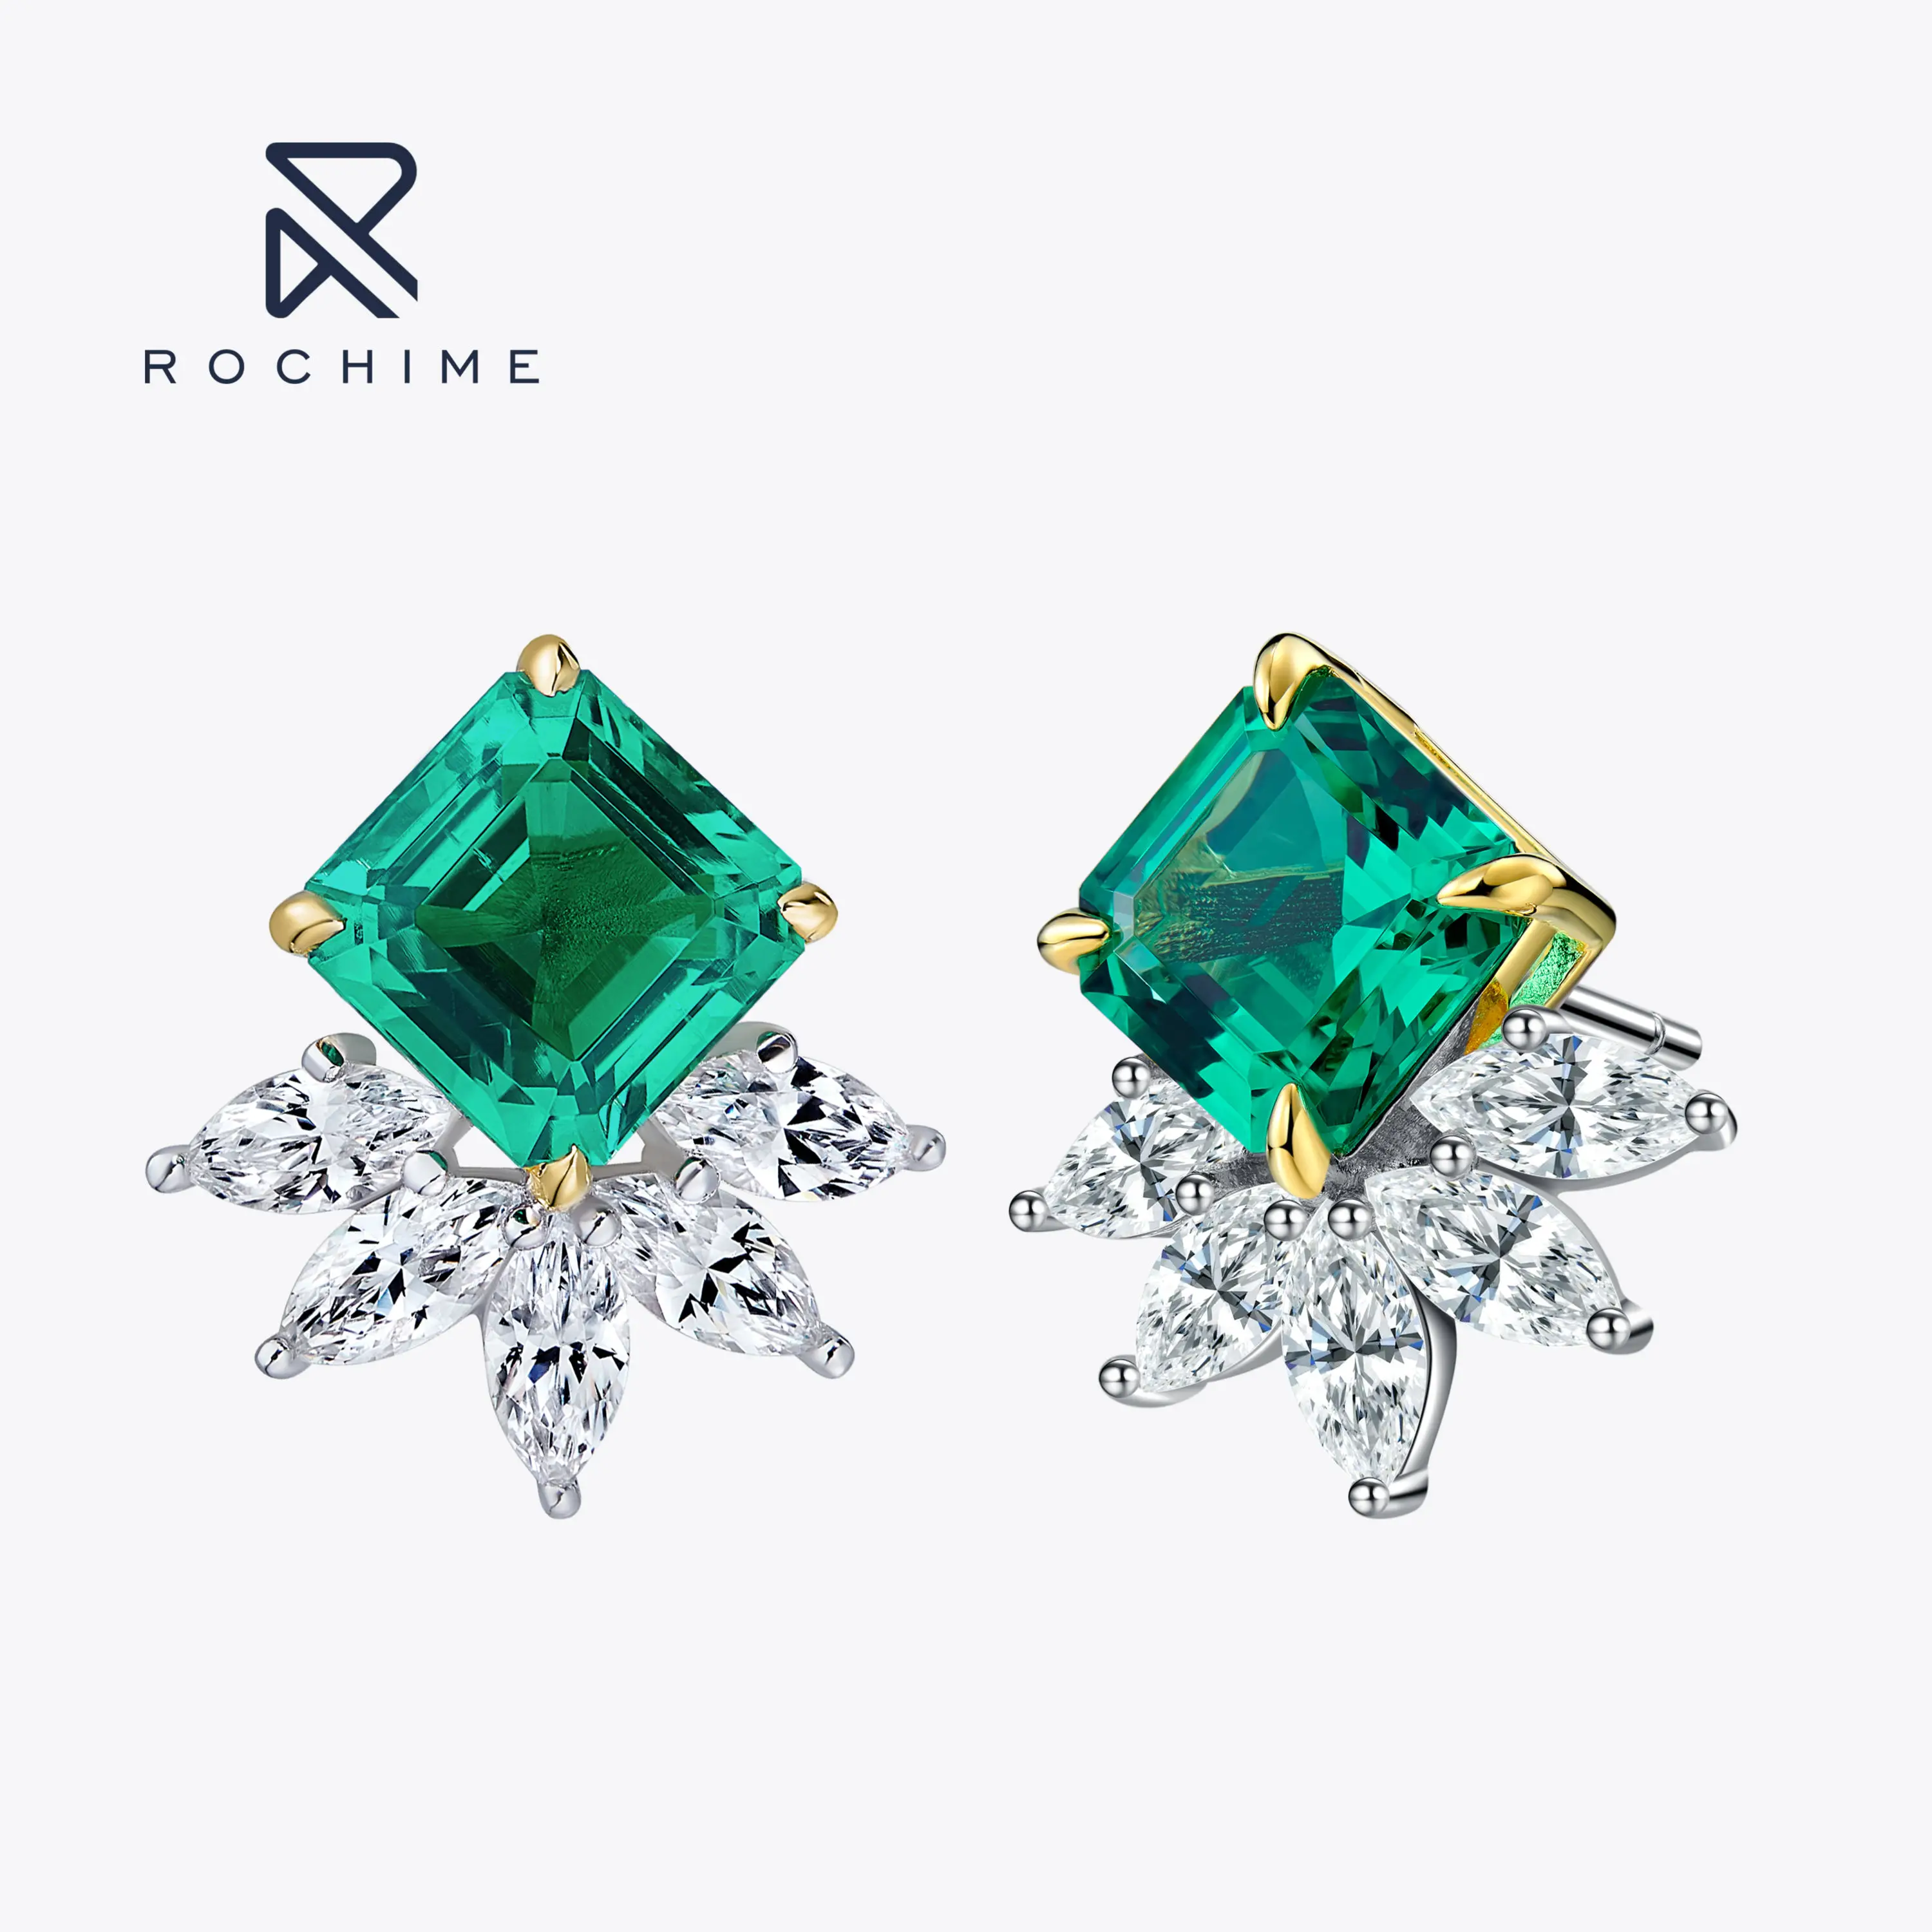 

Rochime Luxury Fashion Jewelry Marquise Cut Lab Grown Emerald Stud Earrings 925 Sterling Silver Gold Plated Women Fine Jewelry